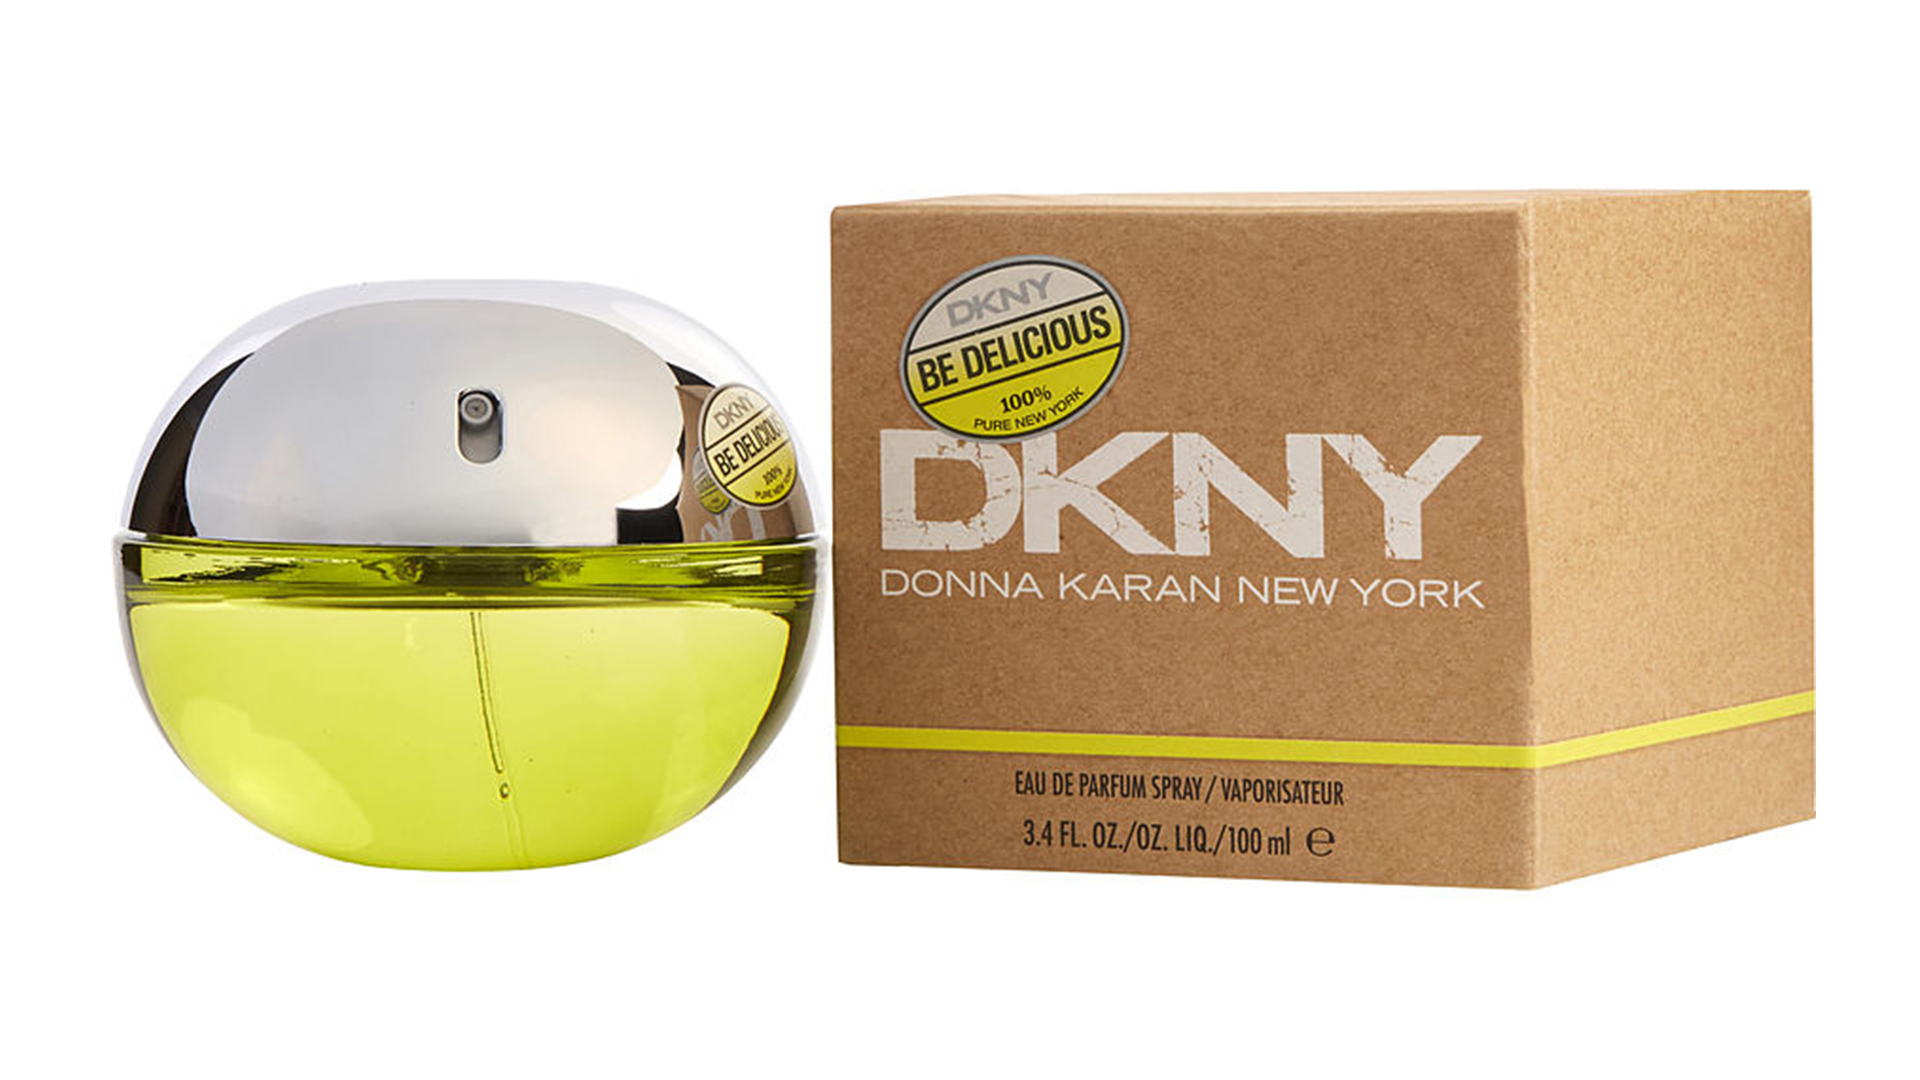 Дикинвай духи. DKNY be delicious 30 мл. Donna Karan DKNY be delicious, EDP, 100 ml. Донна Каран Нью-Йорк зеленое яблоко 100 мл. Туалетная вода Донна Каран Нью-Йорк.